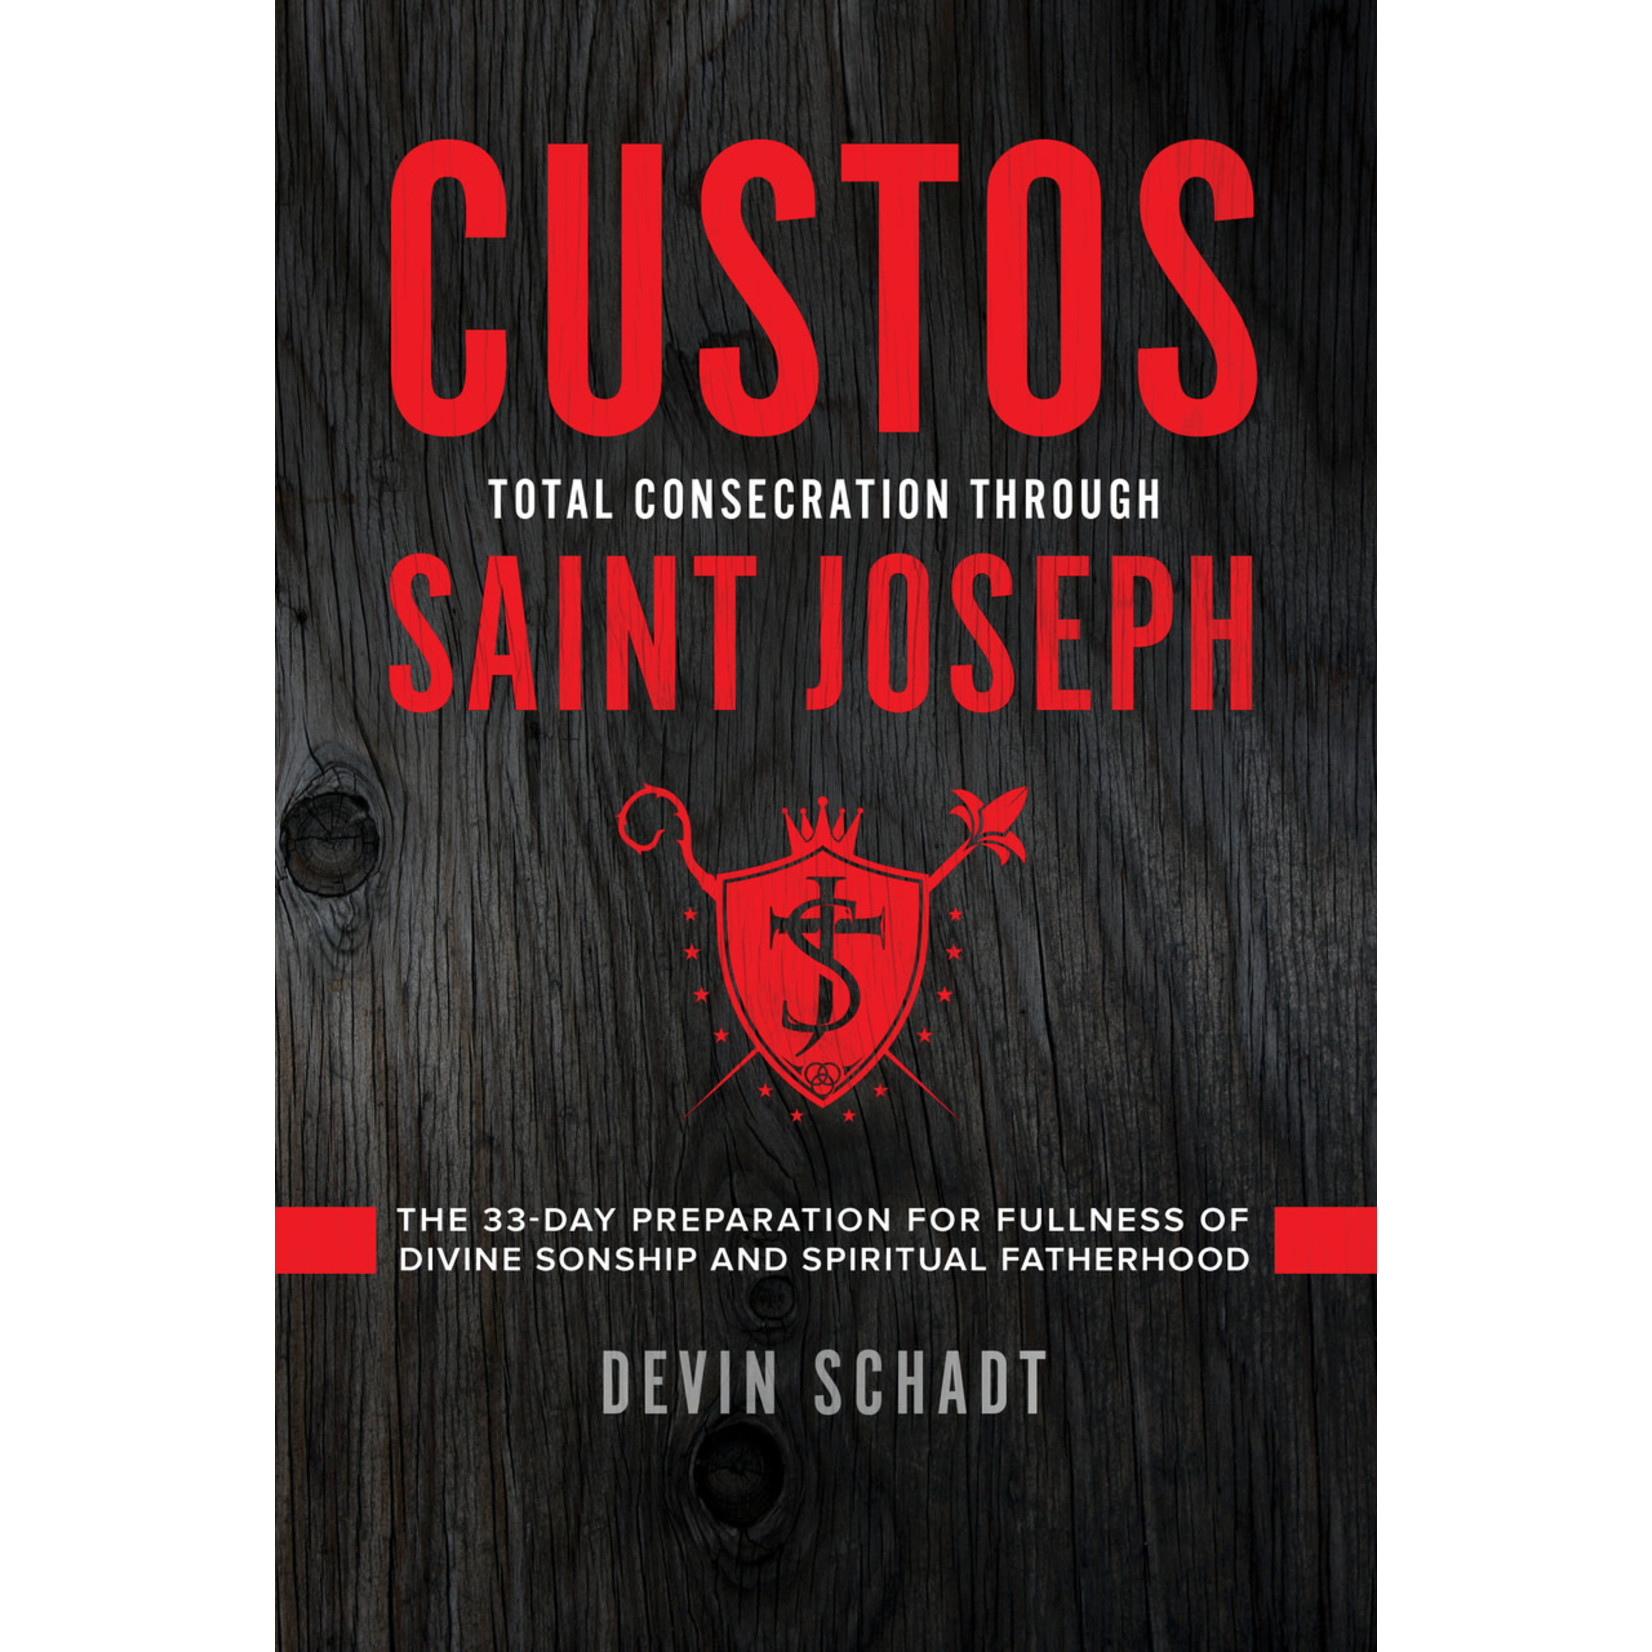 CUSTOS: Total Consecration Through Saint Joseph